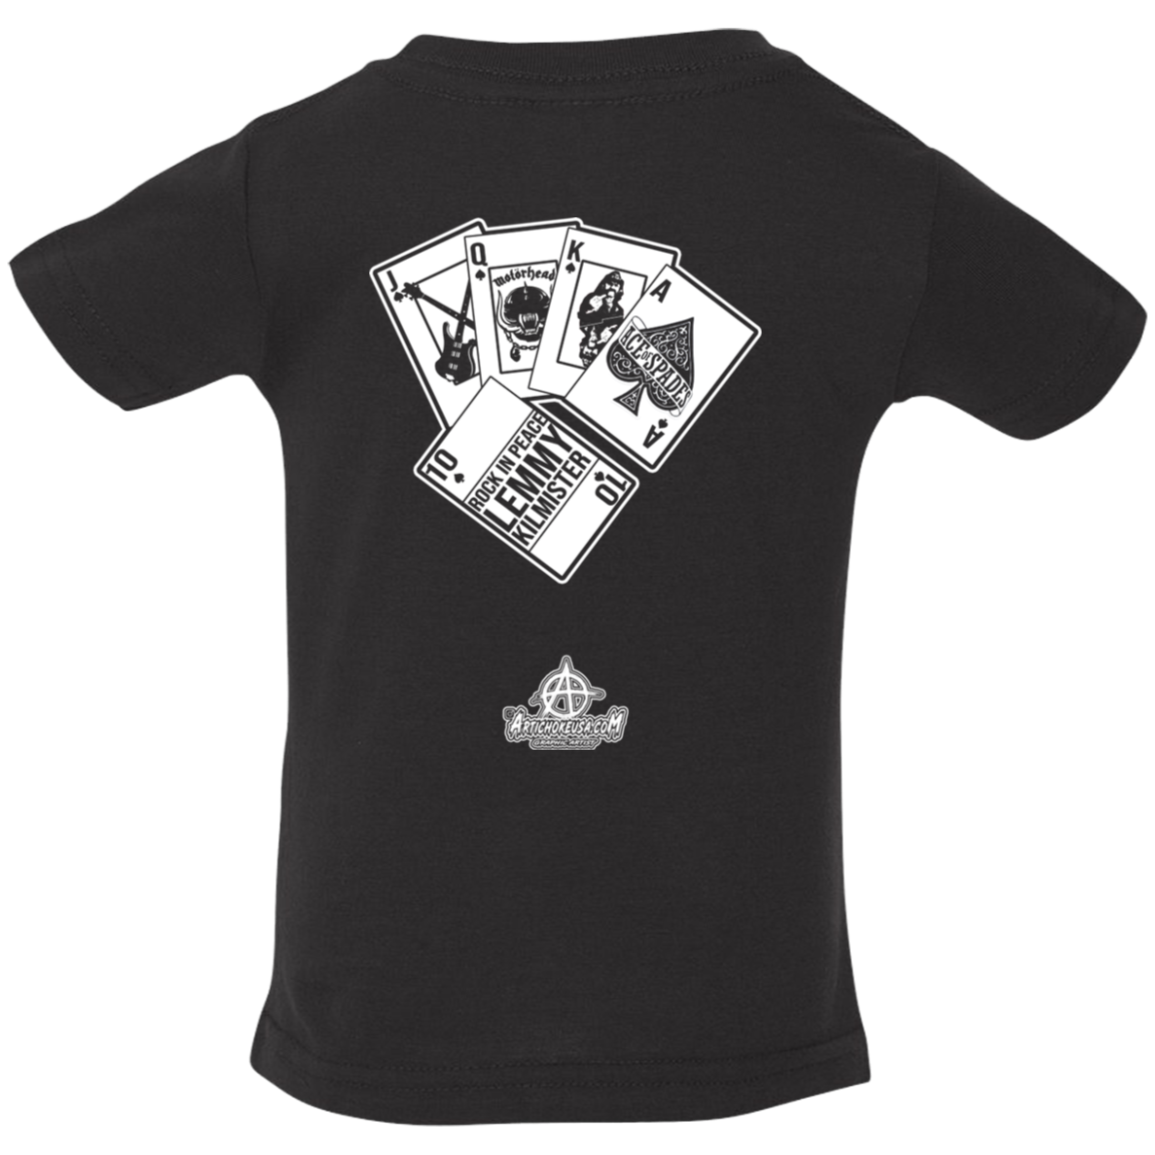 ArtichokeUSA Custom Design. Motorhead's Lemmy Kilmister's Favorite Video Poker Machine. Rock in Peace! Infant Jersey T-Shirt